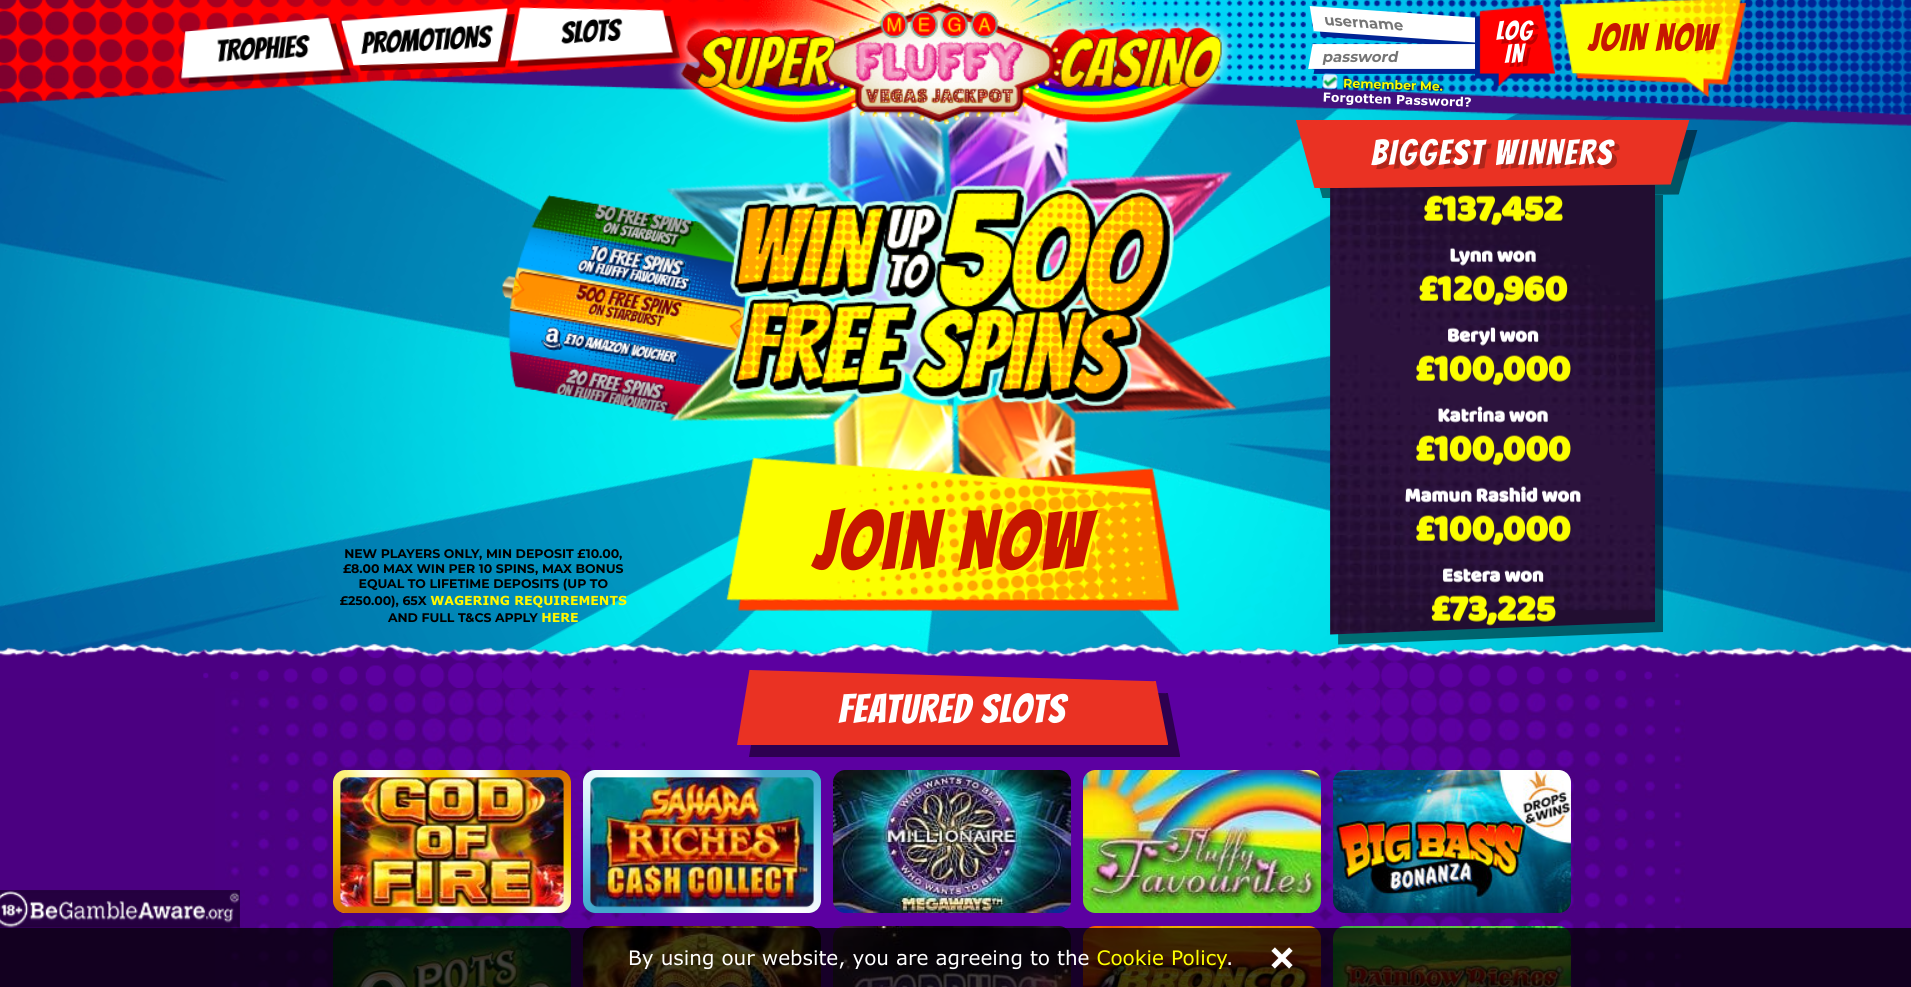 Super Mega Fluffy Rainbow Vegas Jackpot Casino up to 500 Free spins